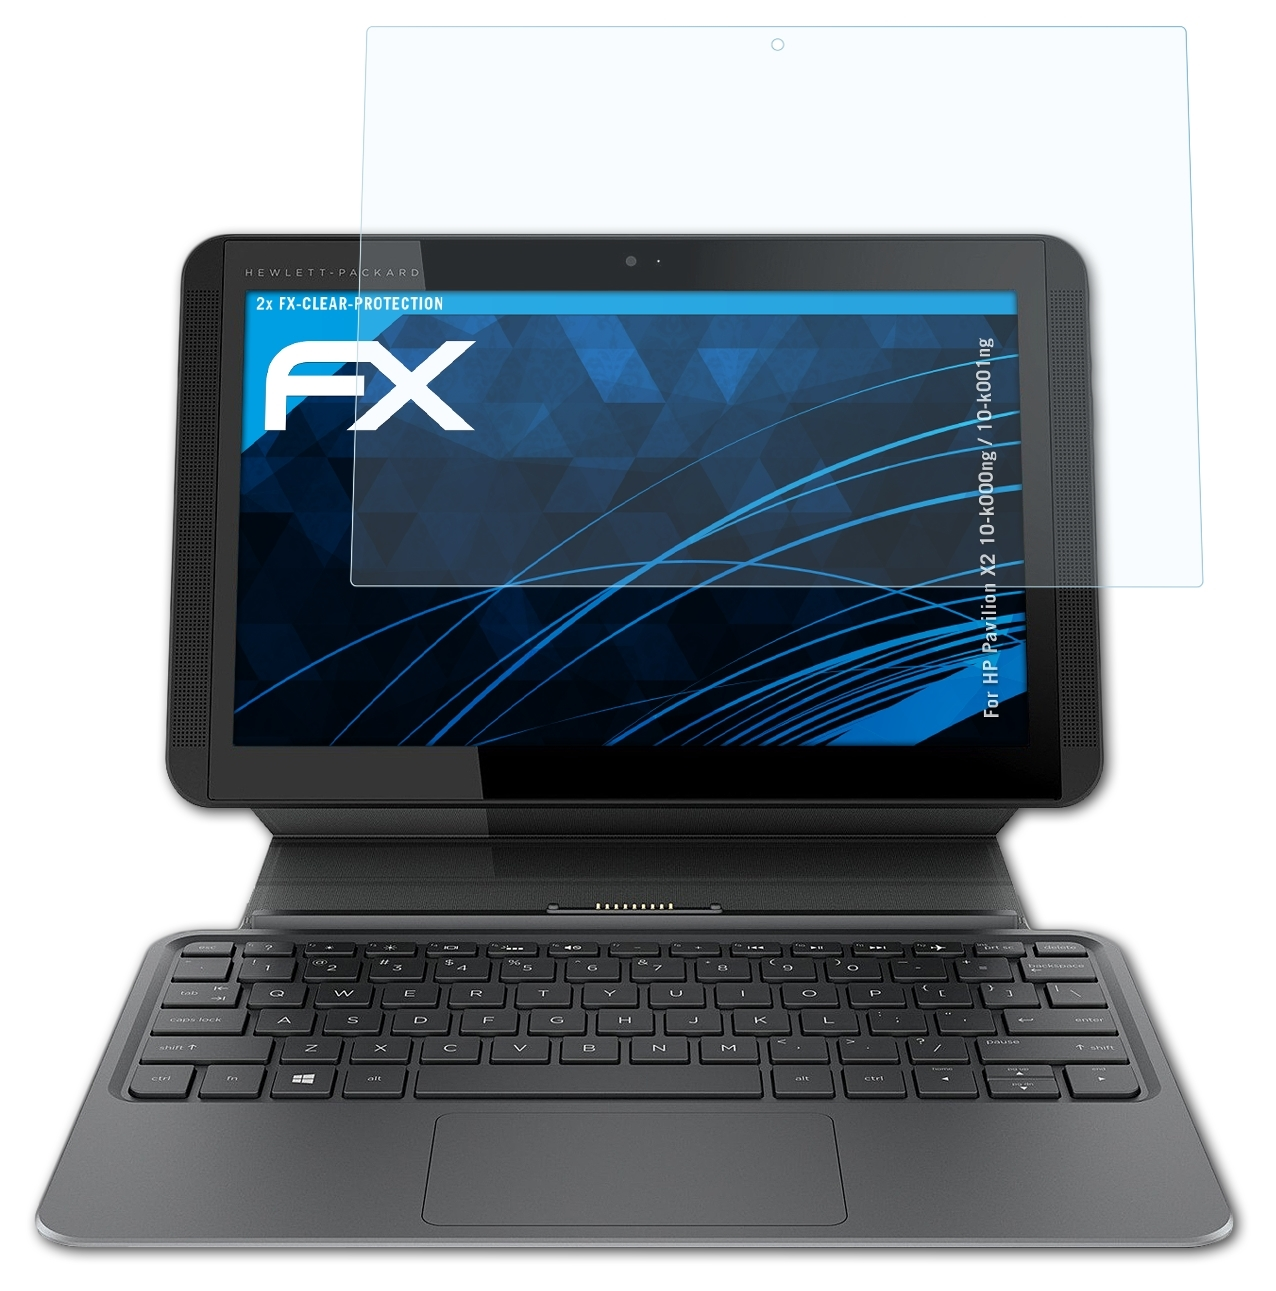 ATFOLIX 2x HP Pavilion Displayschutz(für X2 10-k001ng) / 10-k000ng FX-Clear